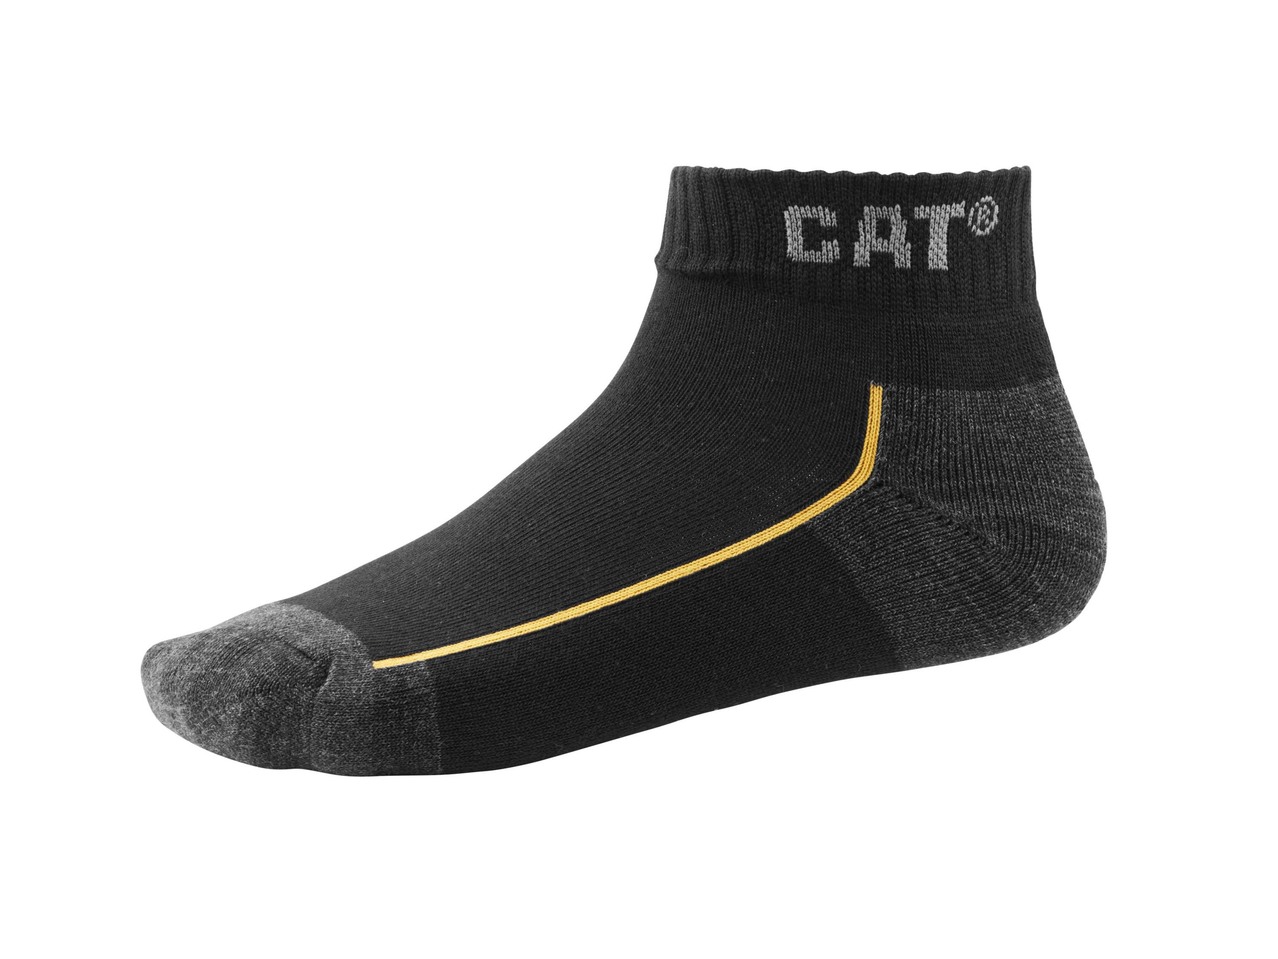 Men's Work Socks "CAT", 3 pairs